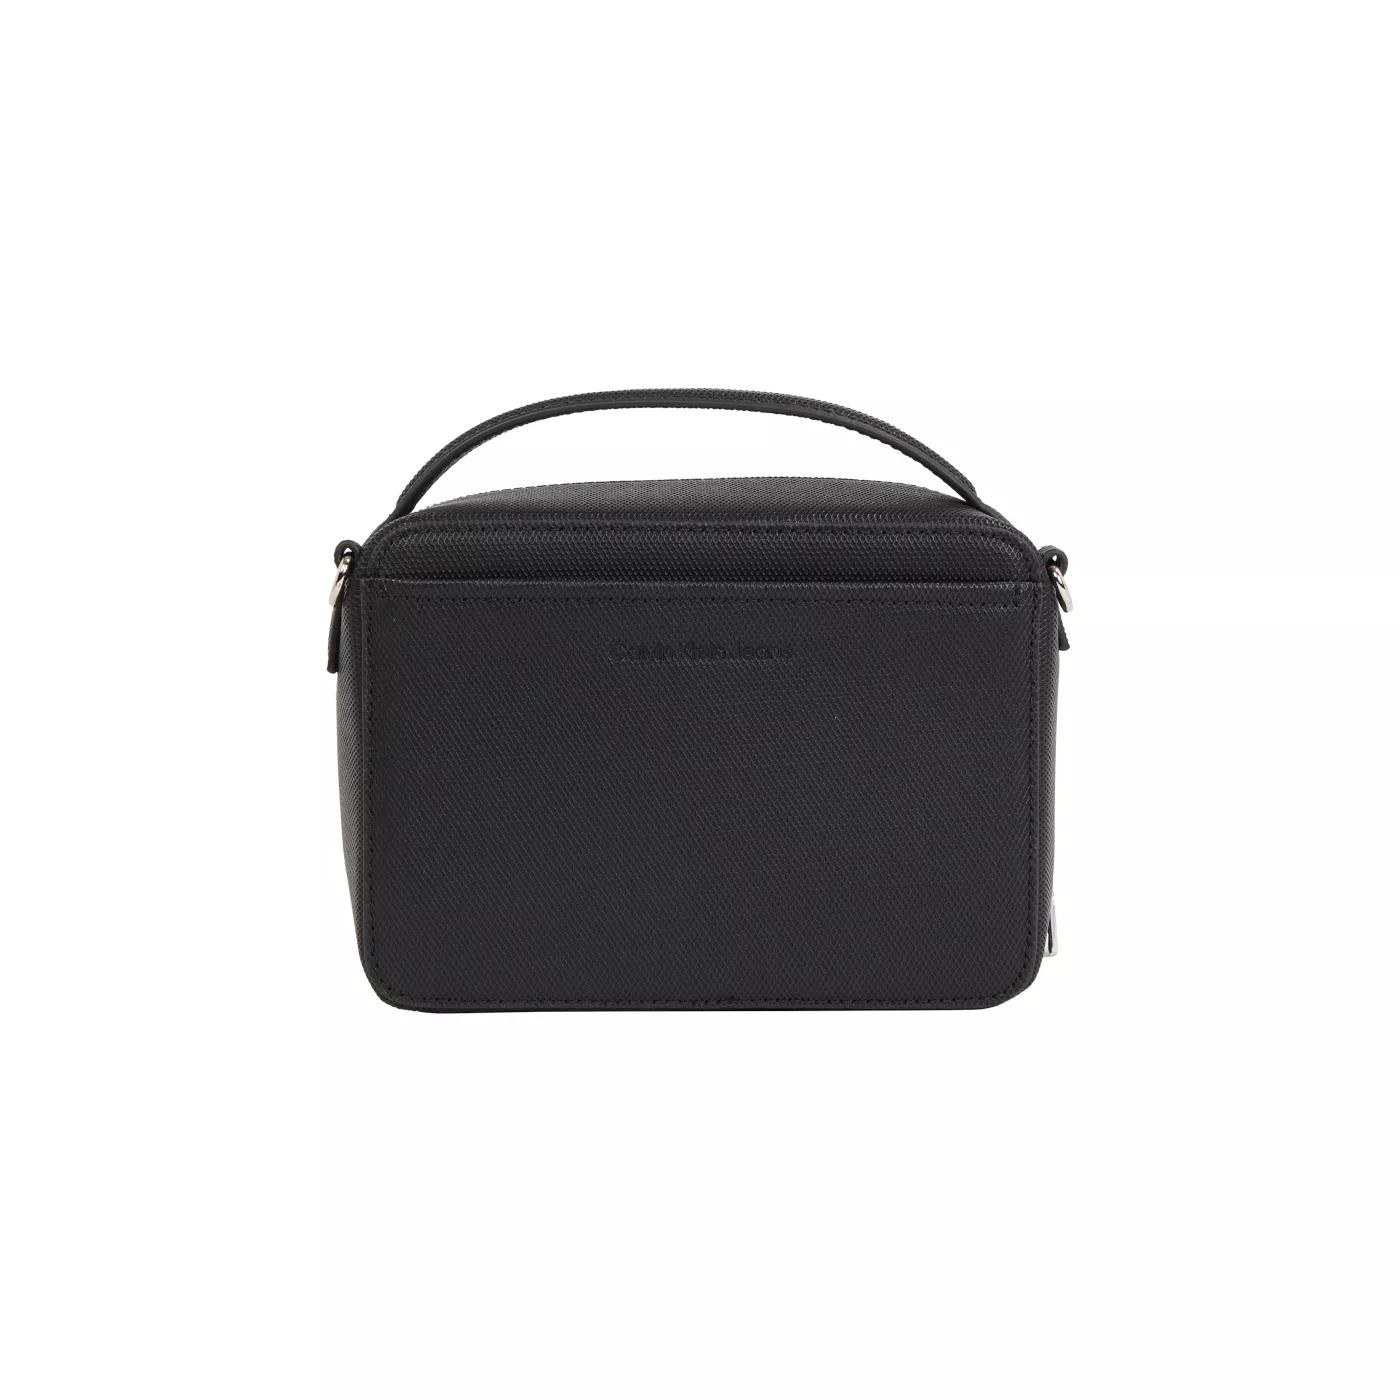 Calvin Klein Crossbody bags Minimal Monogram Schwarze Handtasche in zwart